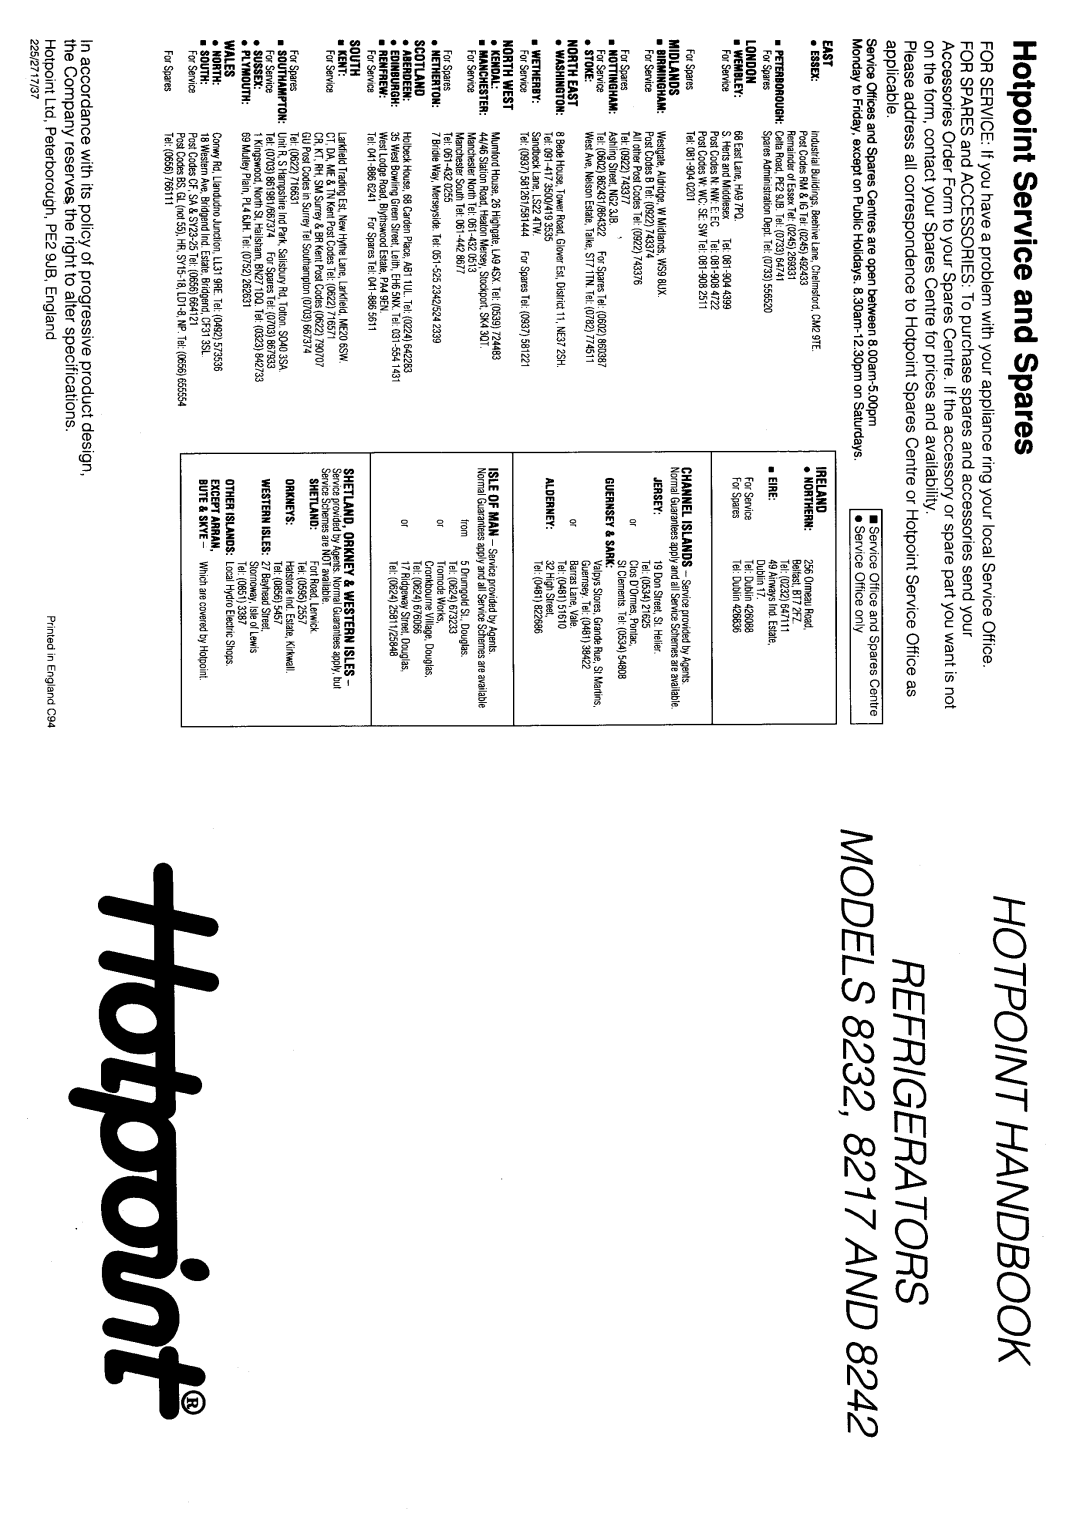 Hotpoint 8217 manual 